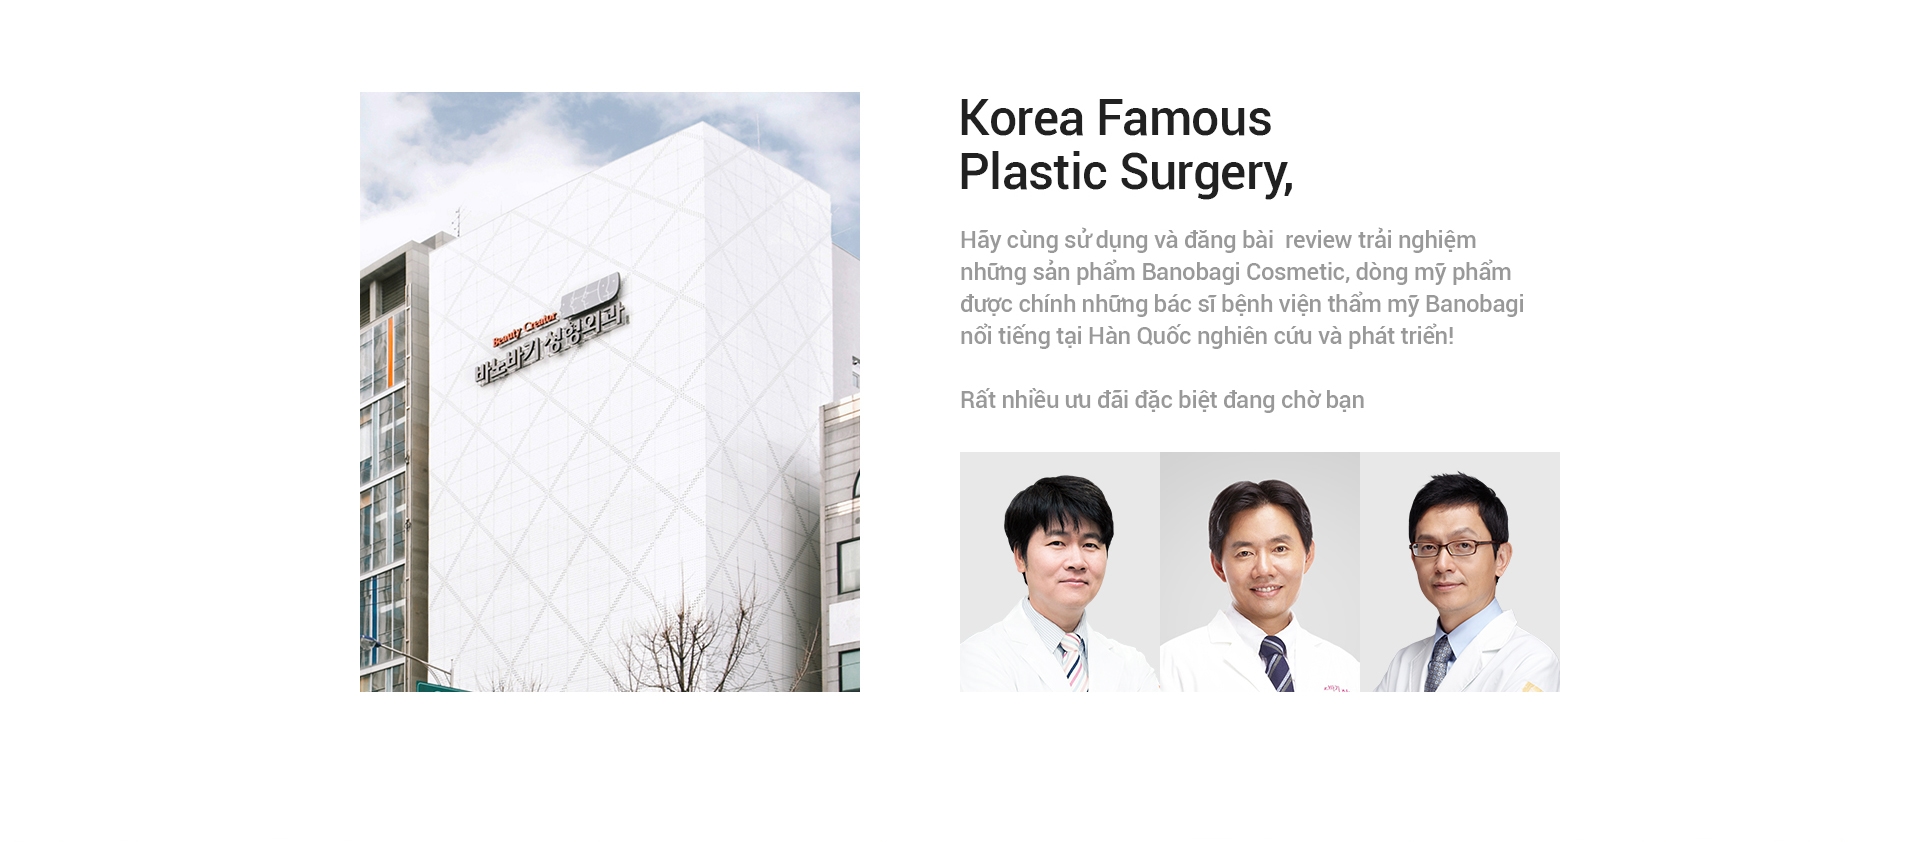 Korea Famous Plastic Surgery